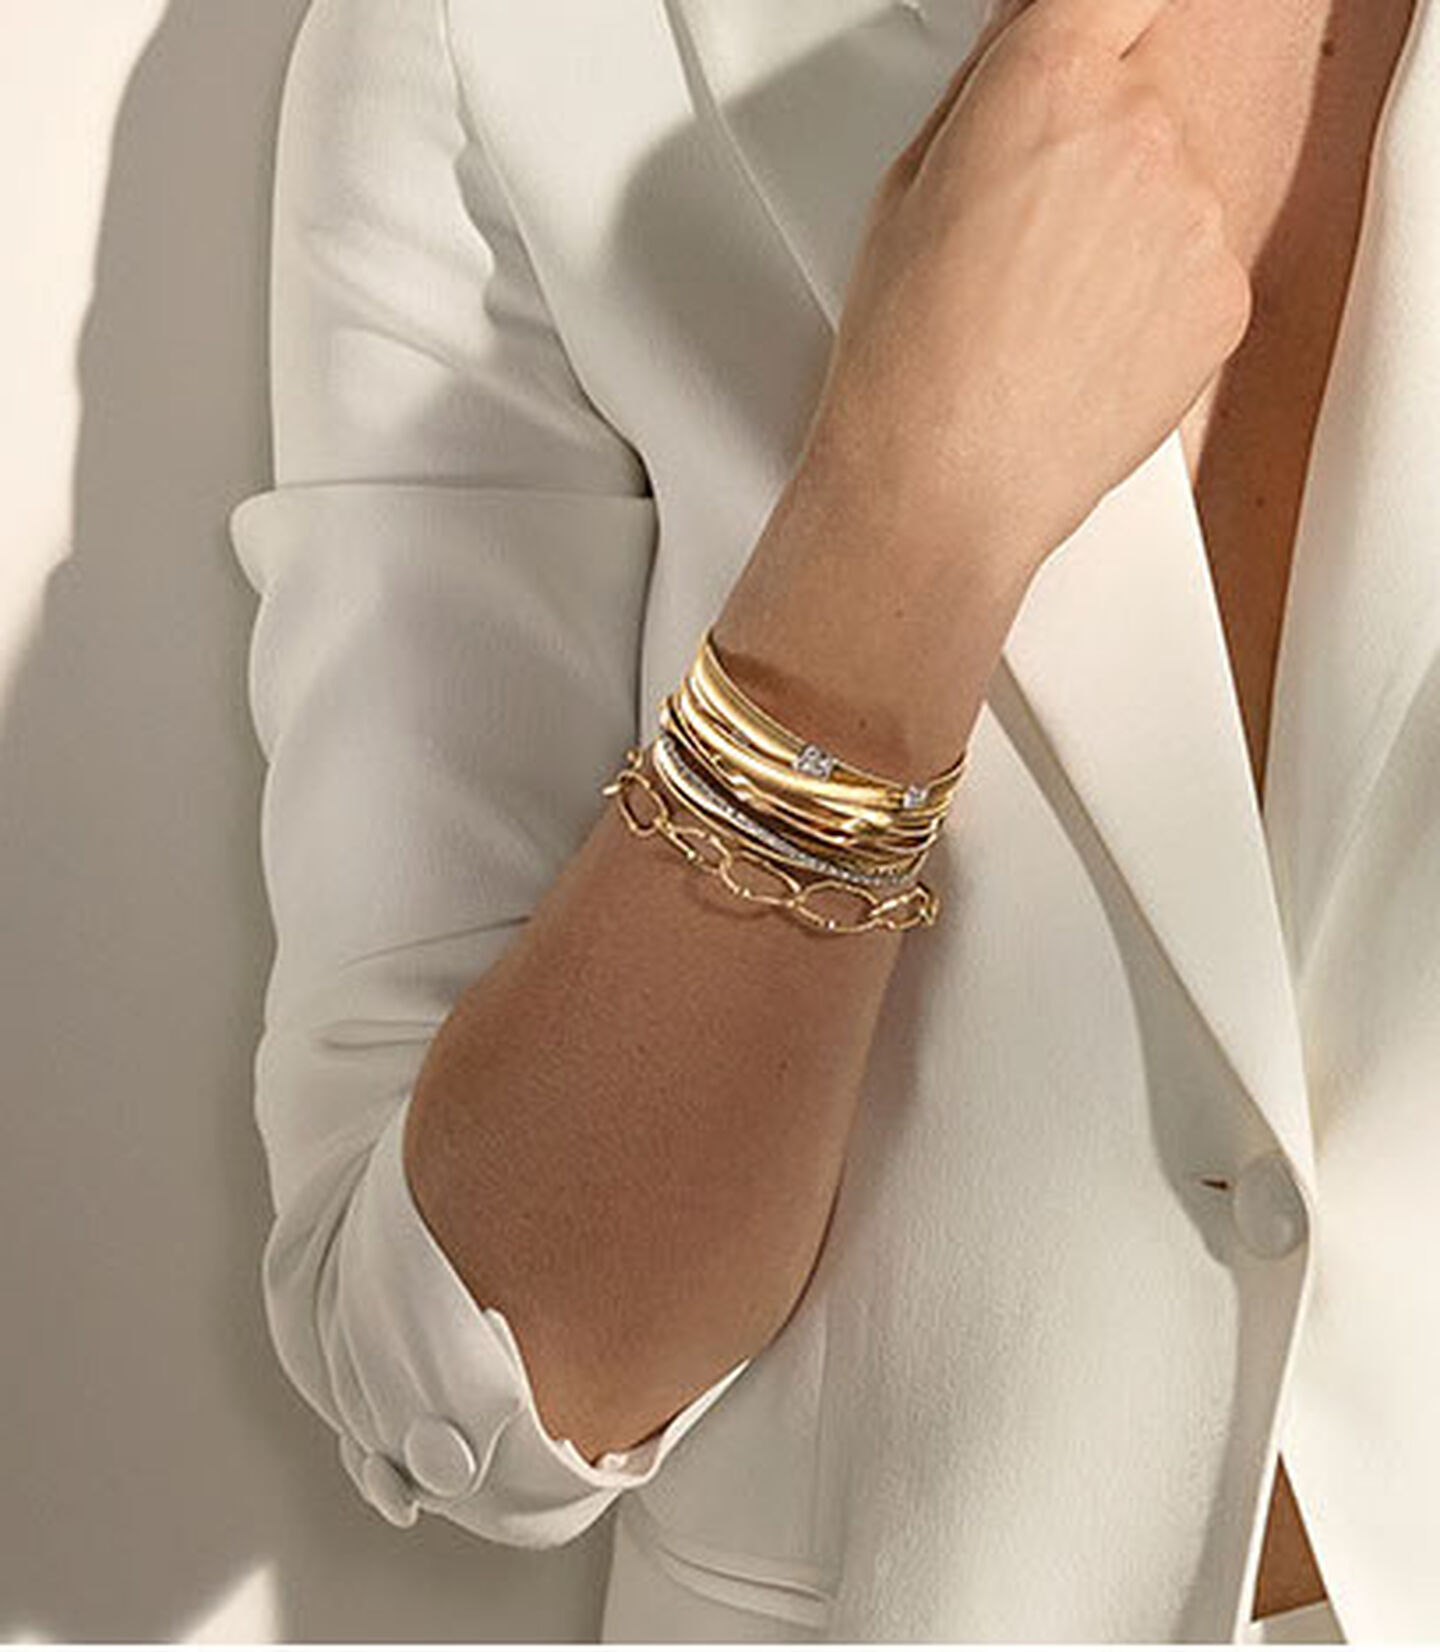 Modèle en blazer blanc portant des bracelets Marco Bicego dorés.